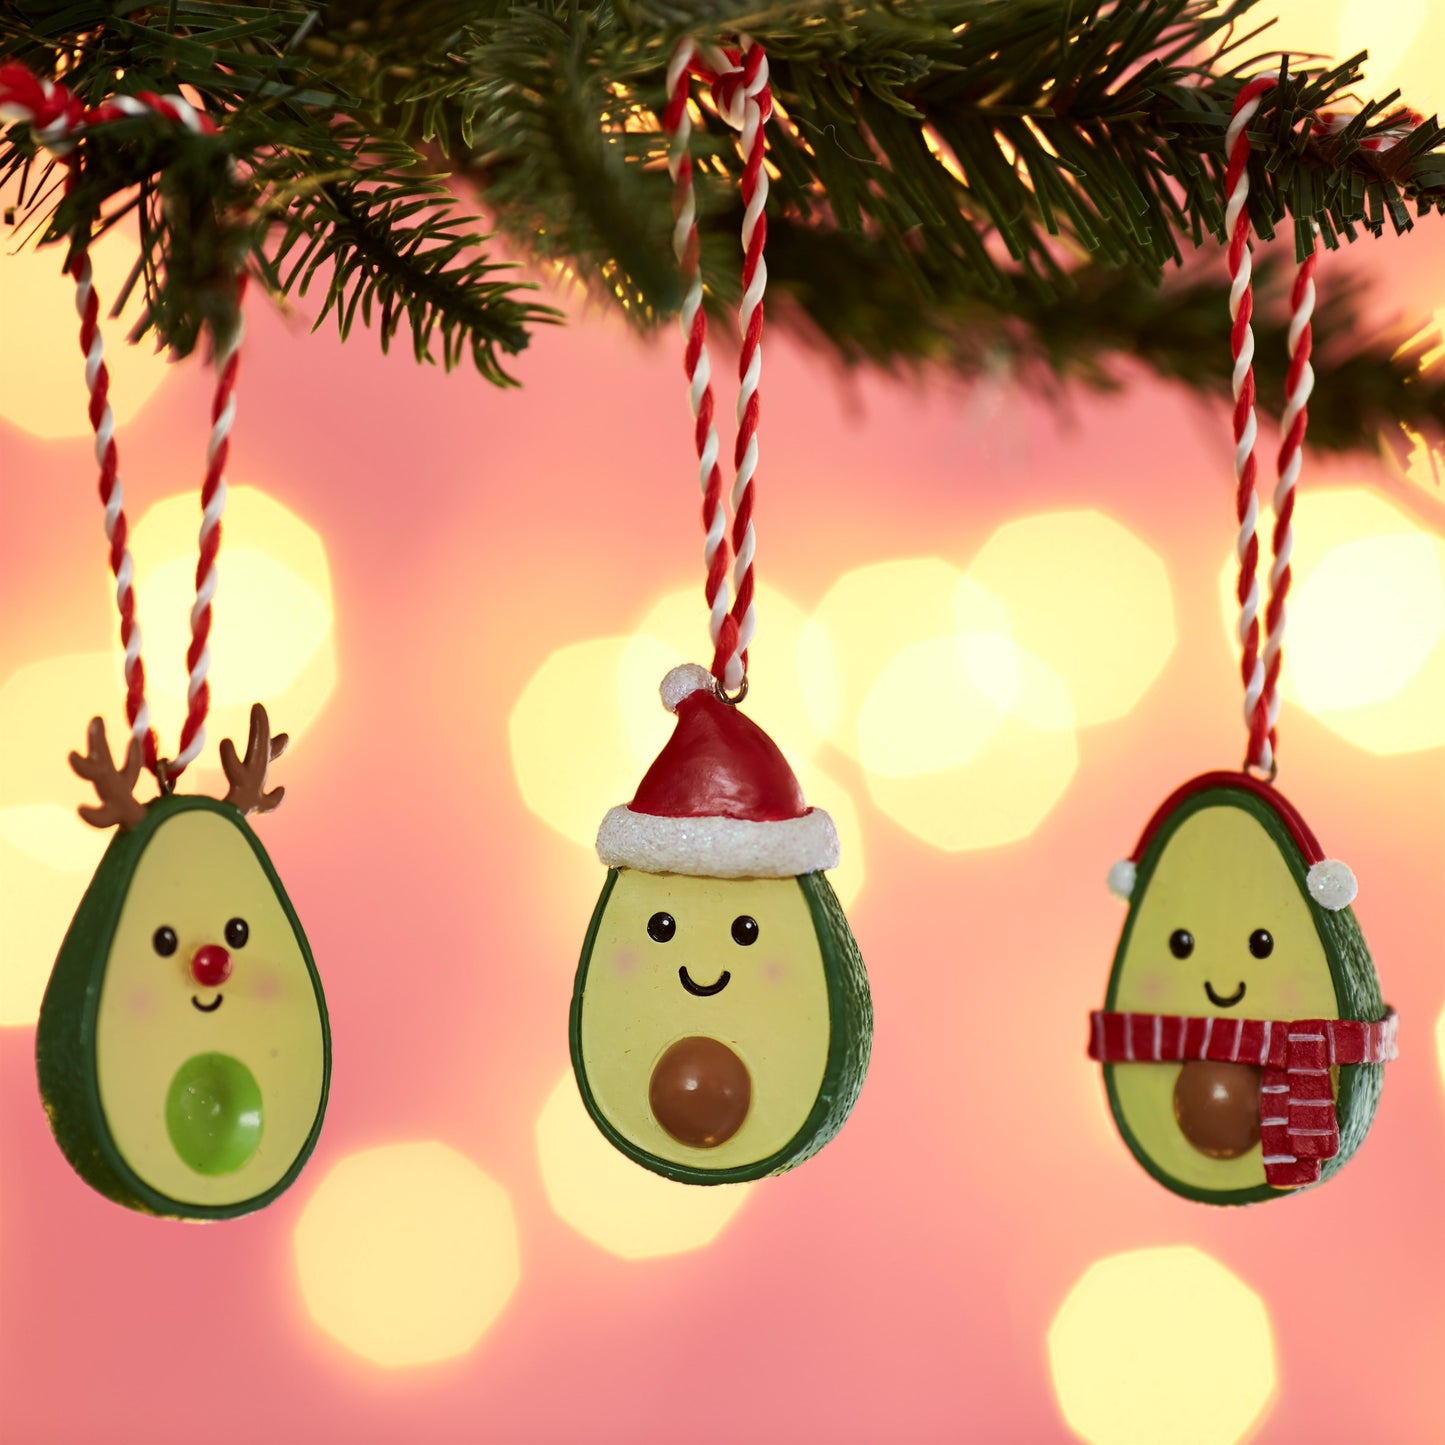 Avocado Hanging Decorations - Set of 3